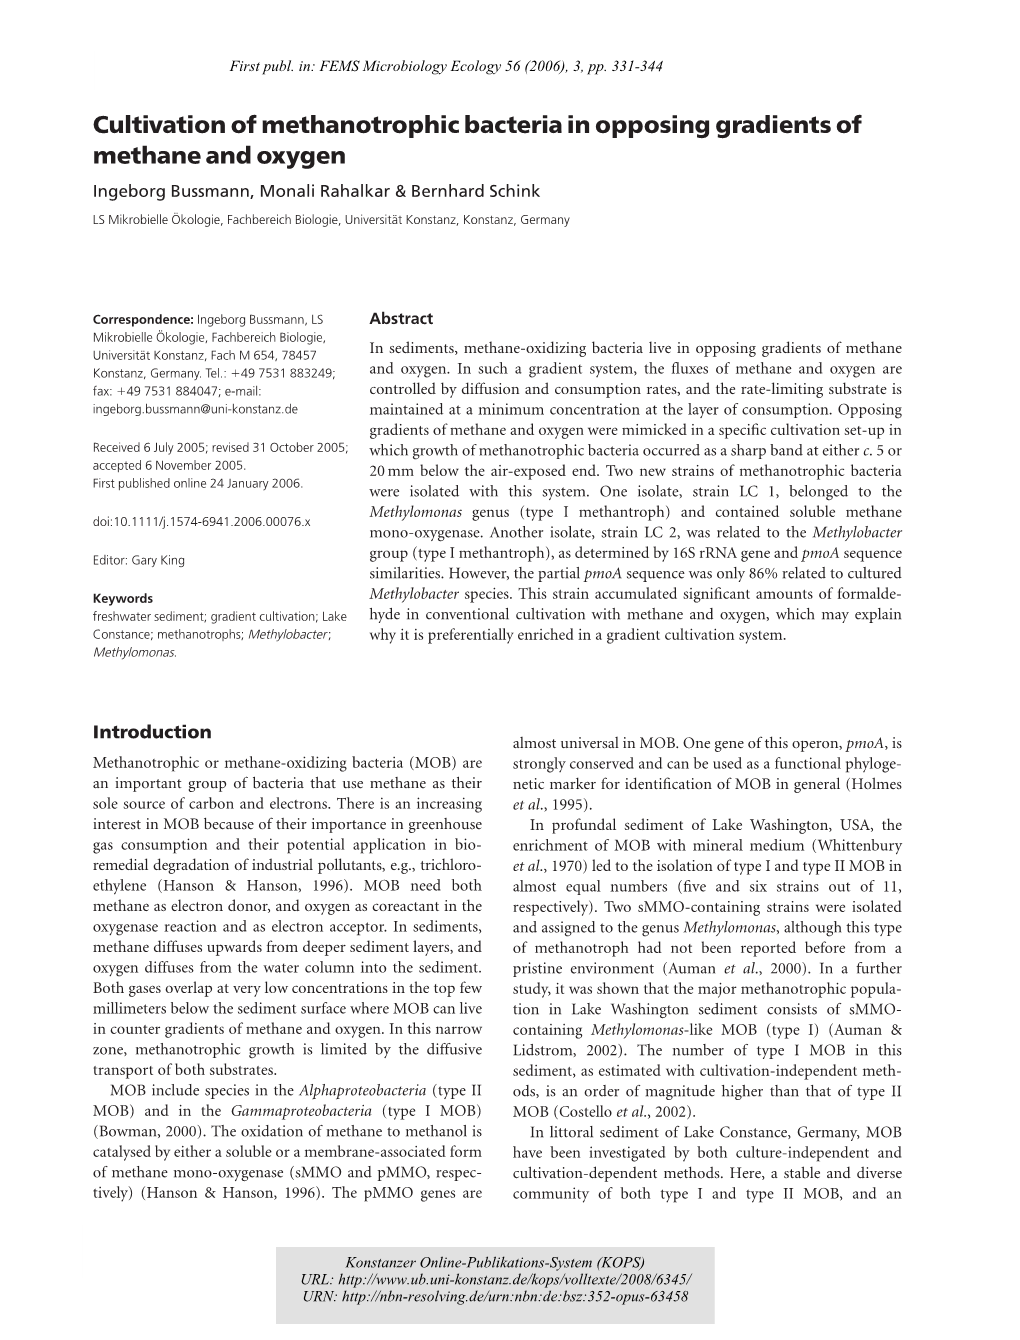 Cultivation of Methanotrophic Bacteria in Opposing Gradients of Methane and Oxygen Ingeborg Bussmann, Monali Rahalkar & Bernhard Schink